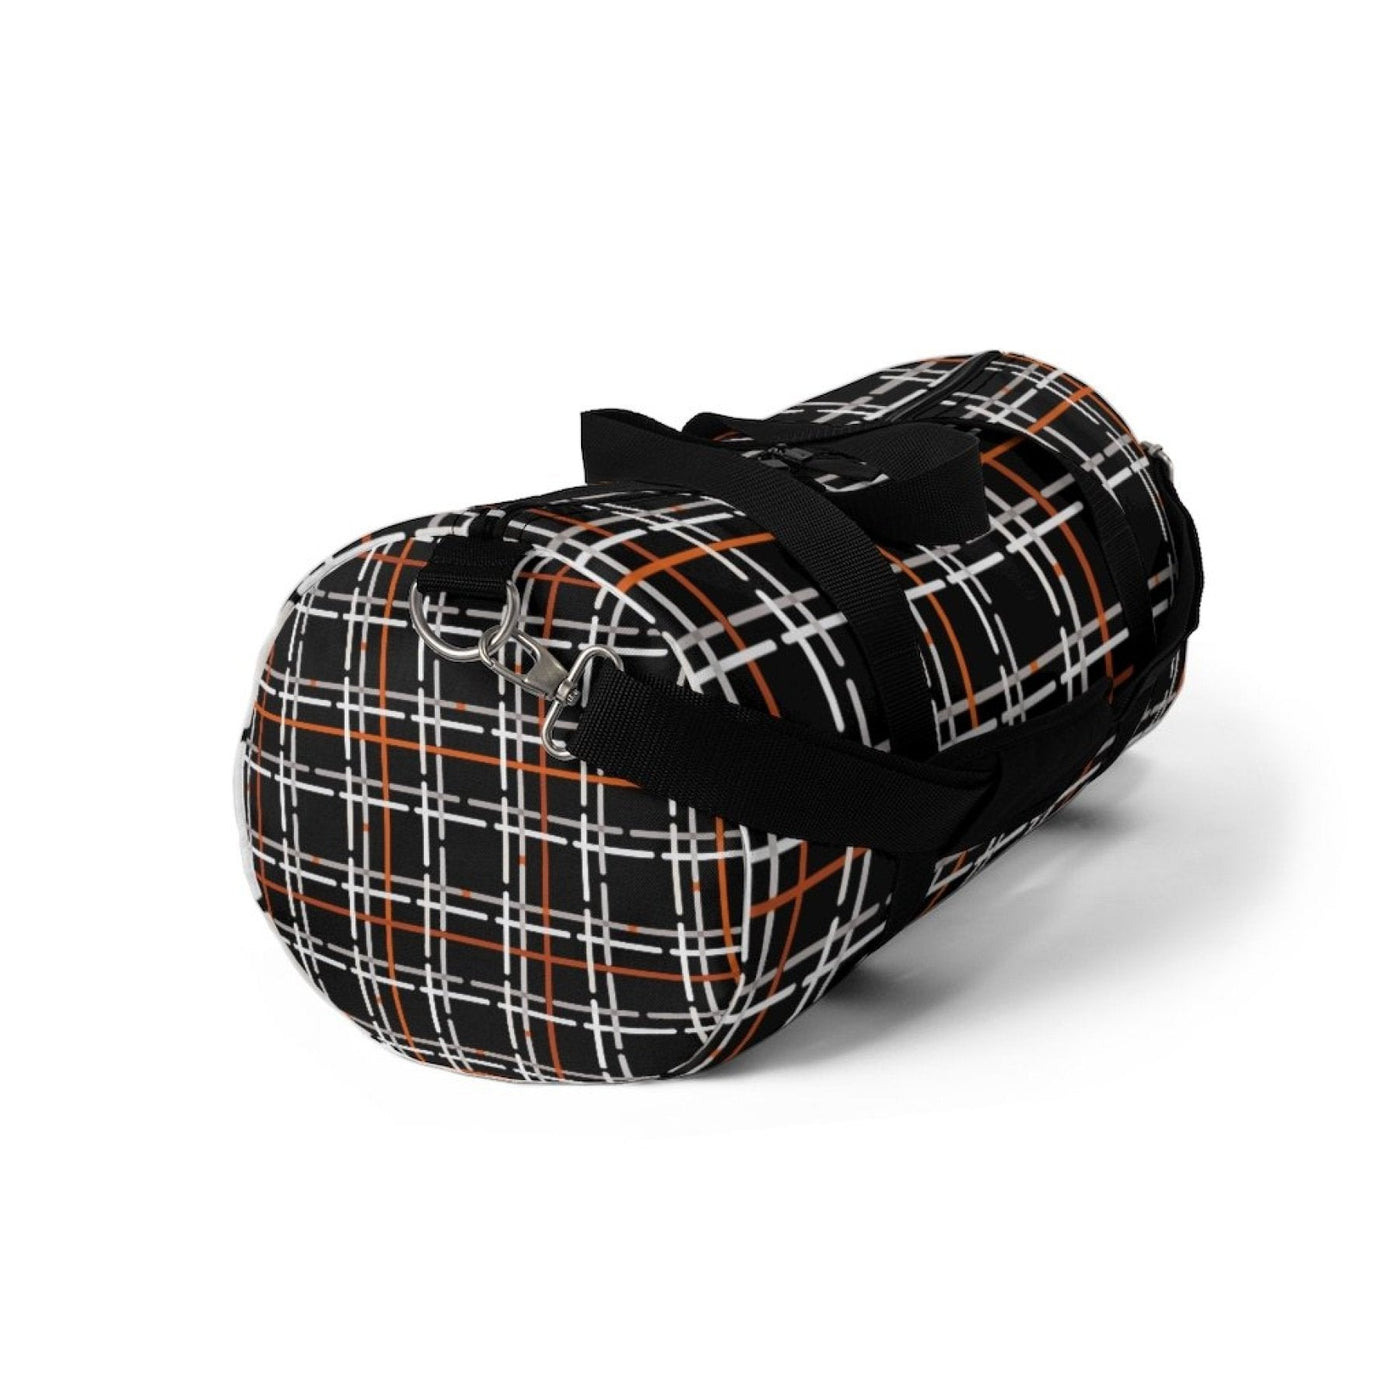 Duffel Bag Carry On Luggage Black And Orange Plaid - Bags | Duffel Bags